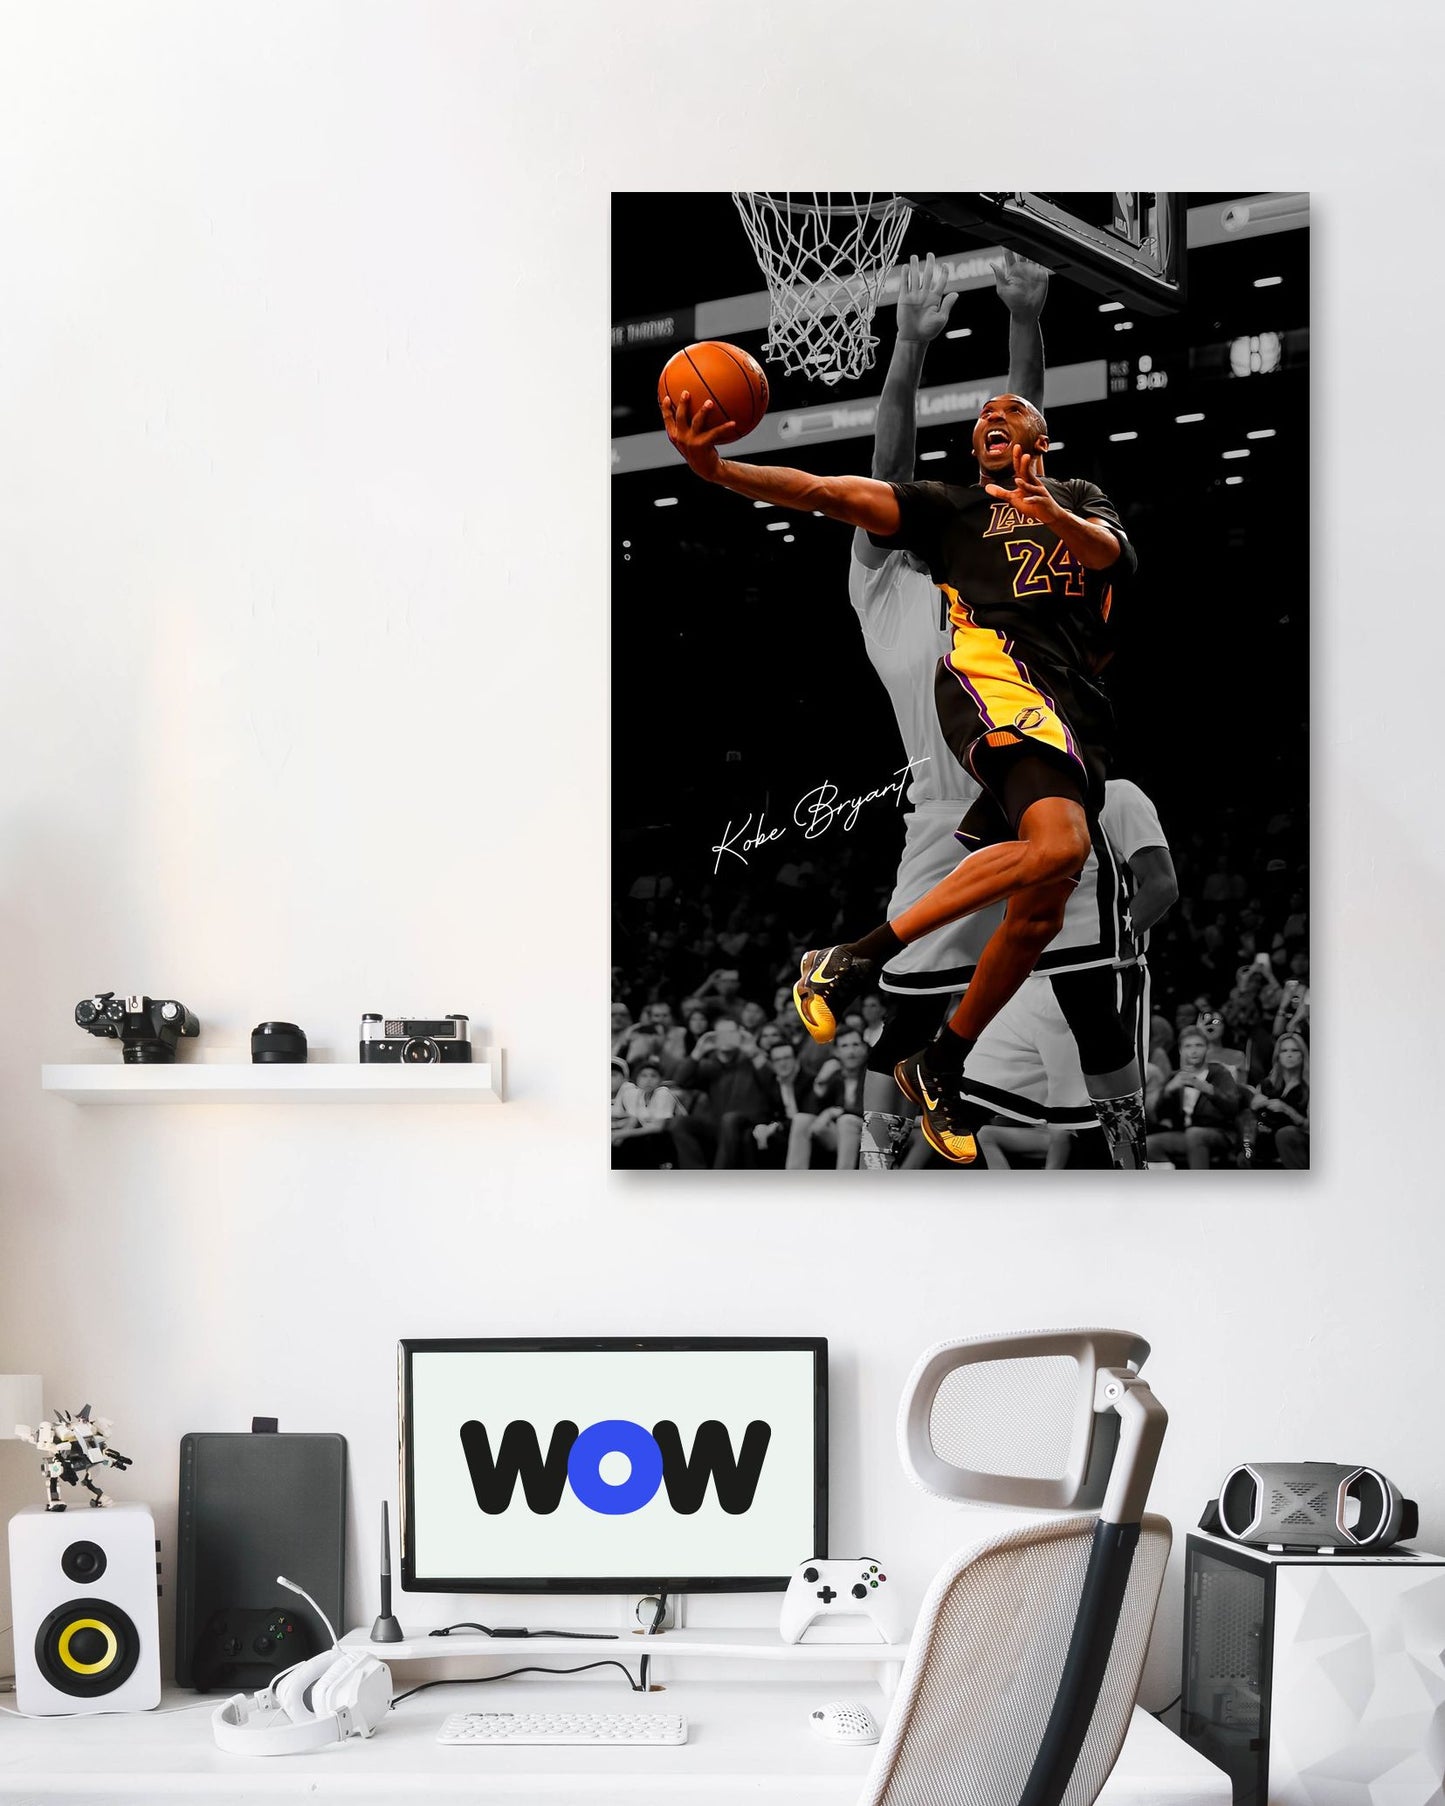 Kobe Bryant 6 - @MiracleCreative